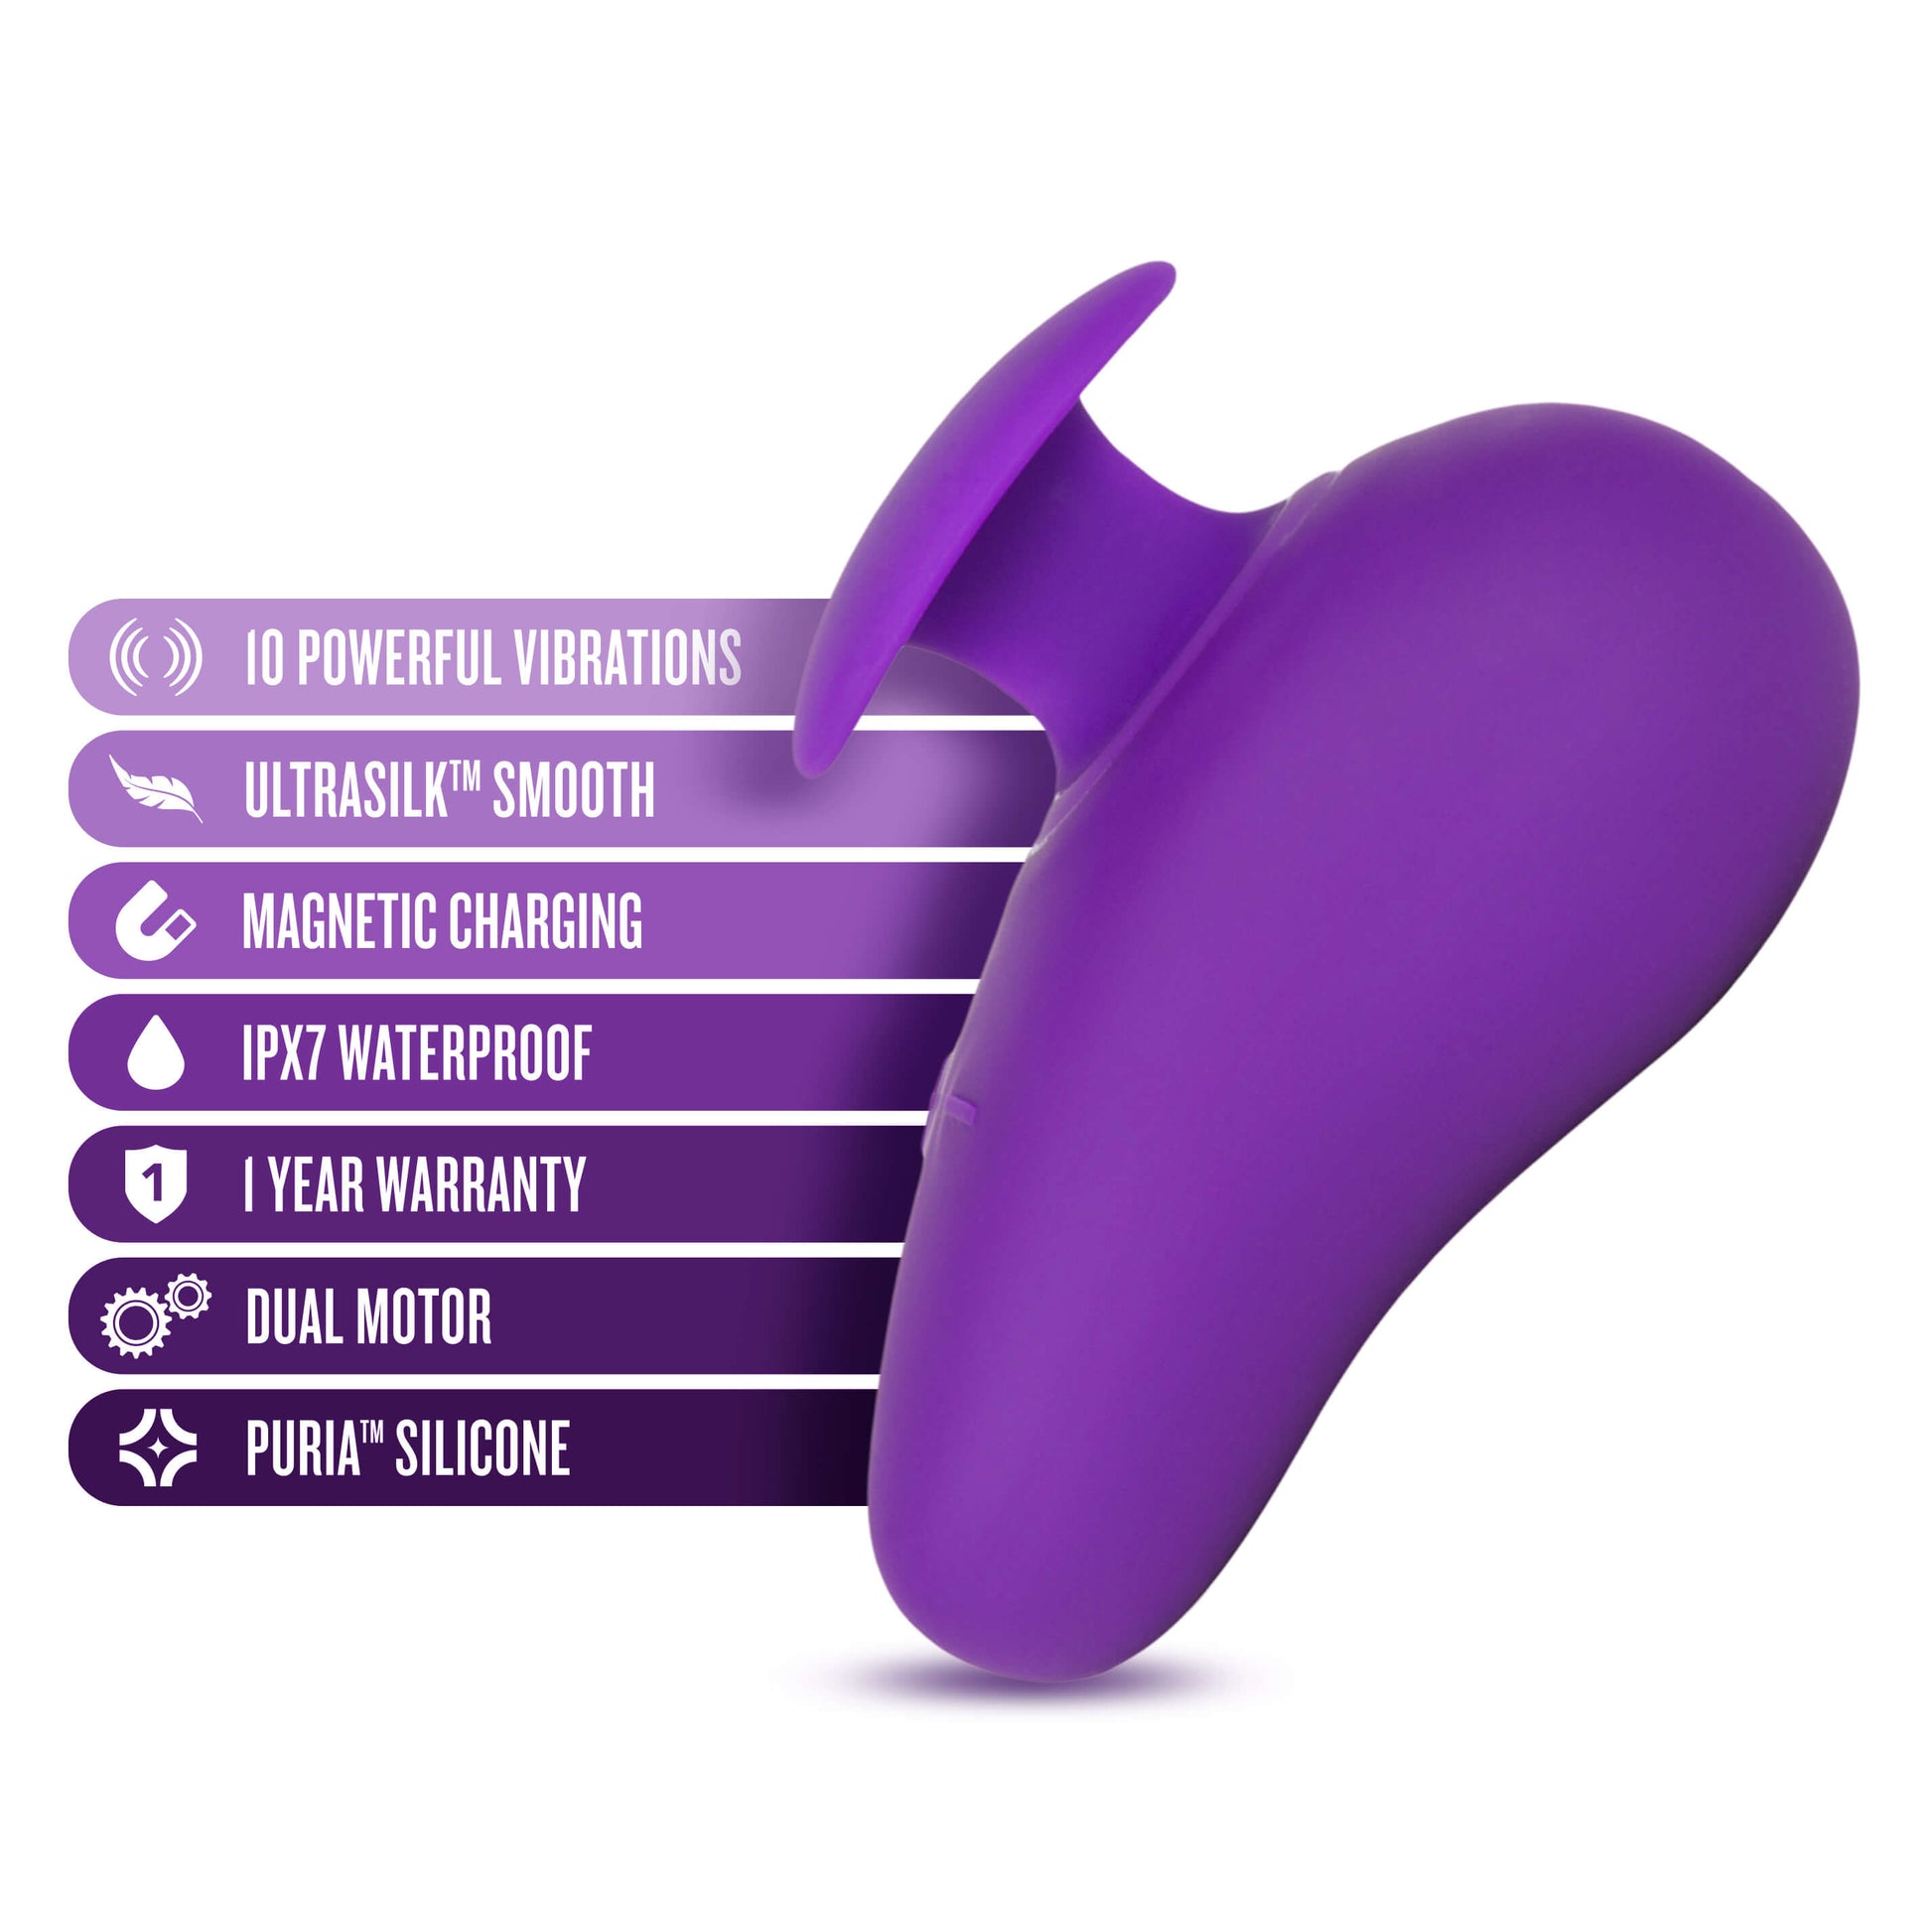 Wellness Palm Sense Vibrator - Blush Novelties - by The Bigger O online sex toy shop USA, Canada & UK shipping available